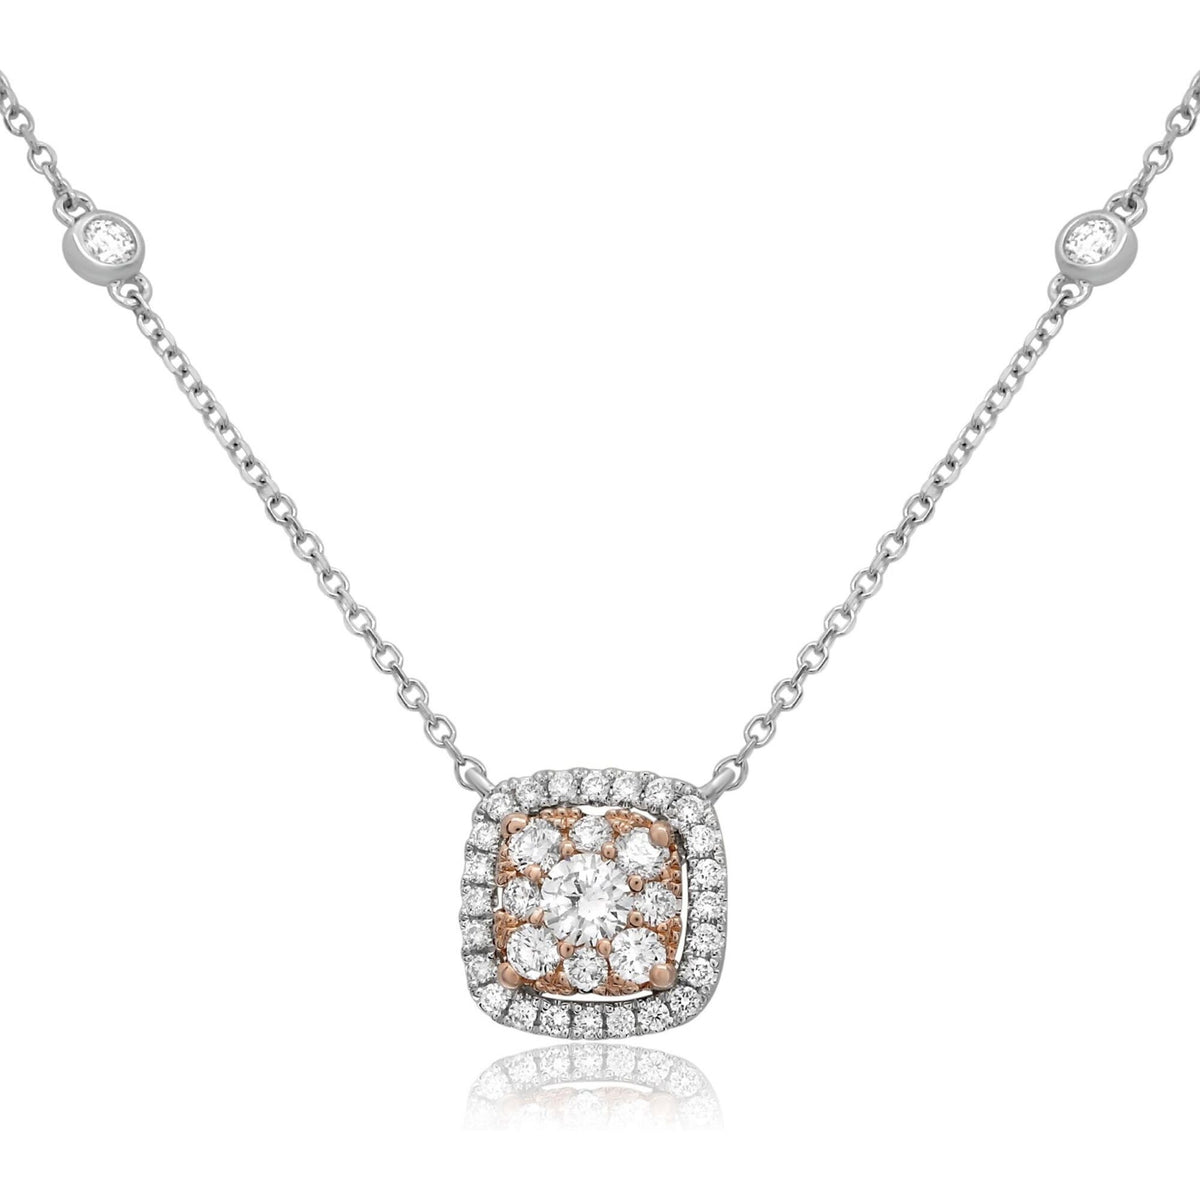 Roman & Jules 14K Rose & White Gold Diamond Cluster Necklace - 0.1 Carat Total Diamond Weight